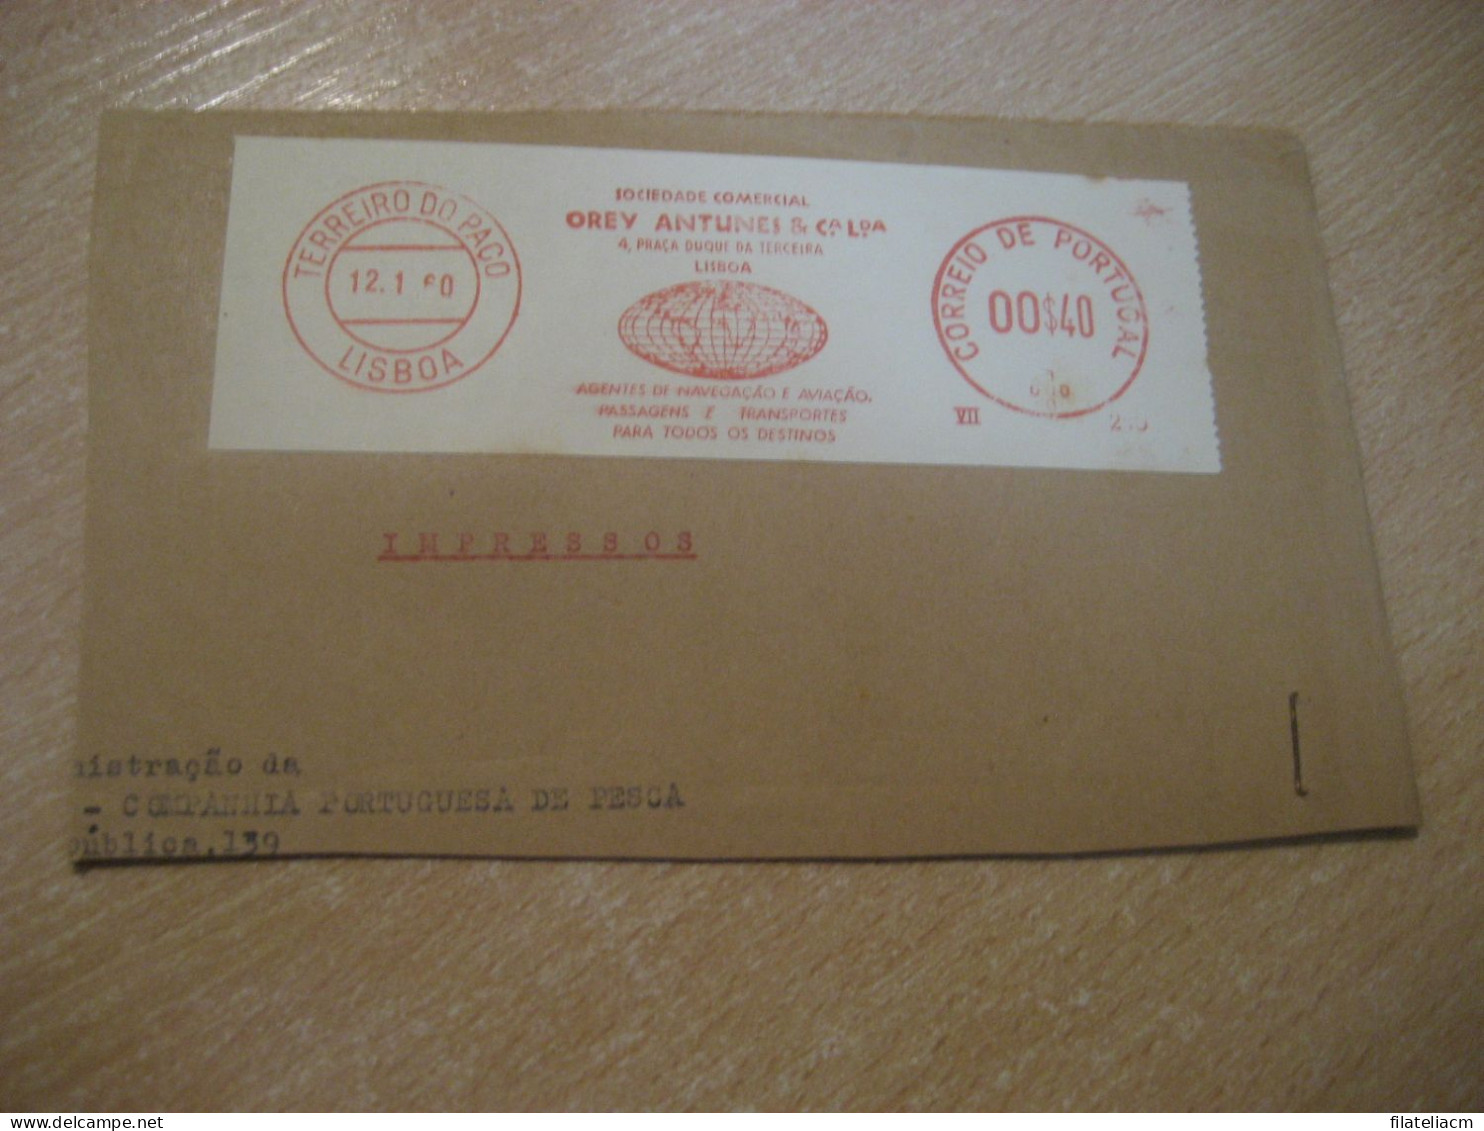 LISBOA 1960 Orey Antunes Agentes De Navegaçao E Aviaçao Meter Mail Cancel Cut Cuted Cover PORTUGAL - Lettres & Documents